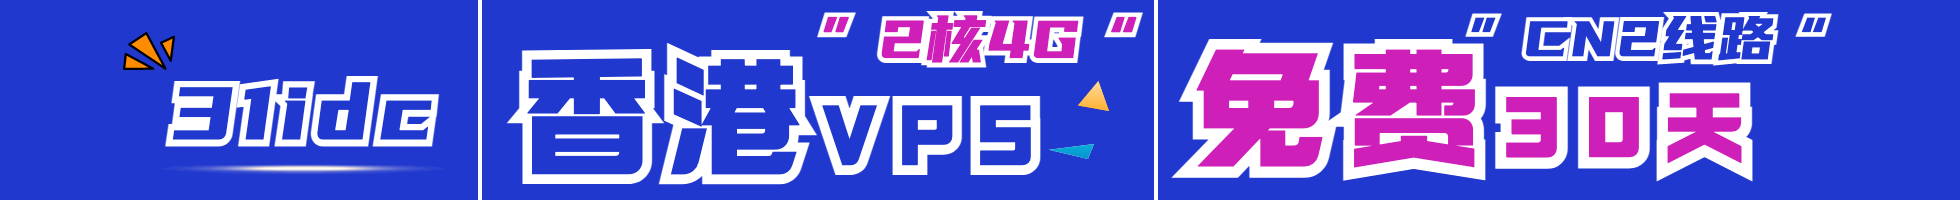 DesiVPS，美国便宜VPS特价$22/年，特价便宜独立服务器/物理服务器，1Gbps带宽/不限流量/每年可免费更换3次IP